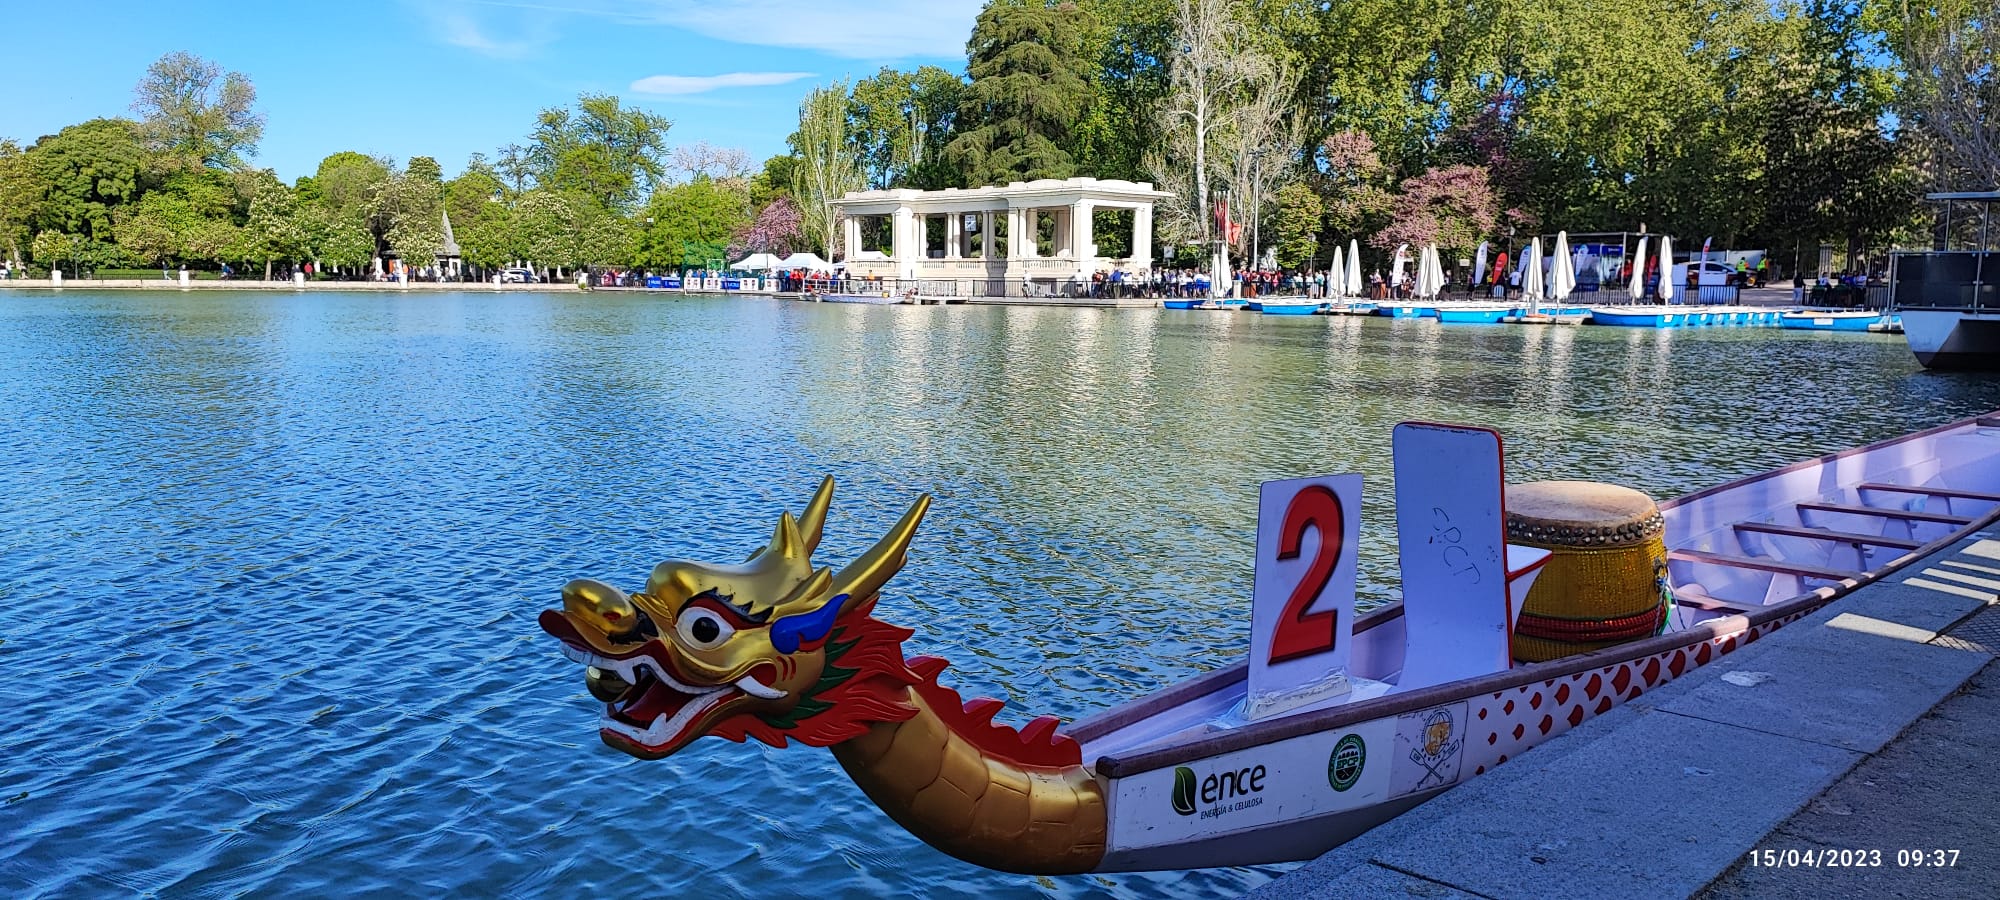 I Campeonato Dragon Boat en el Retiro